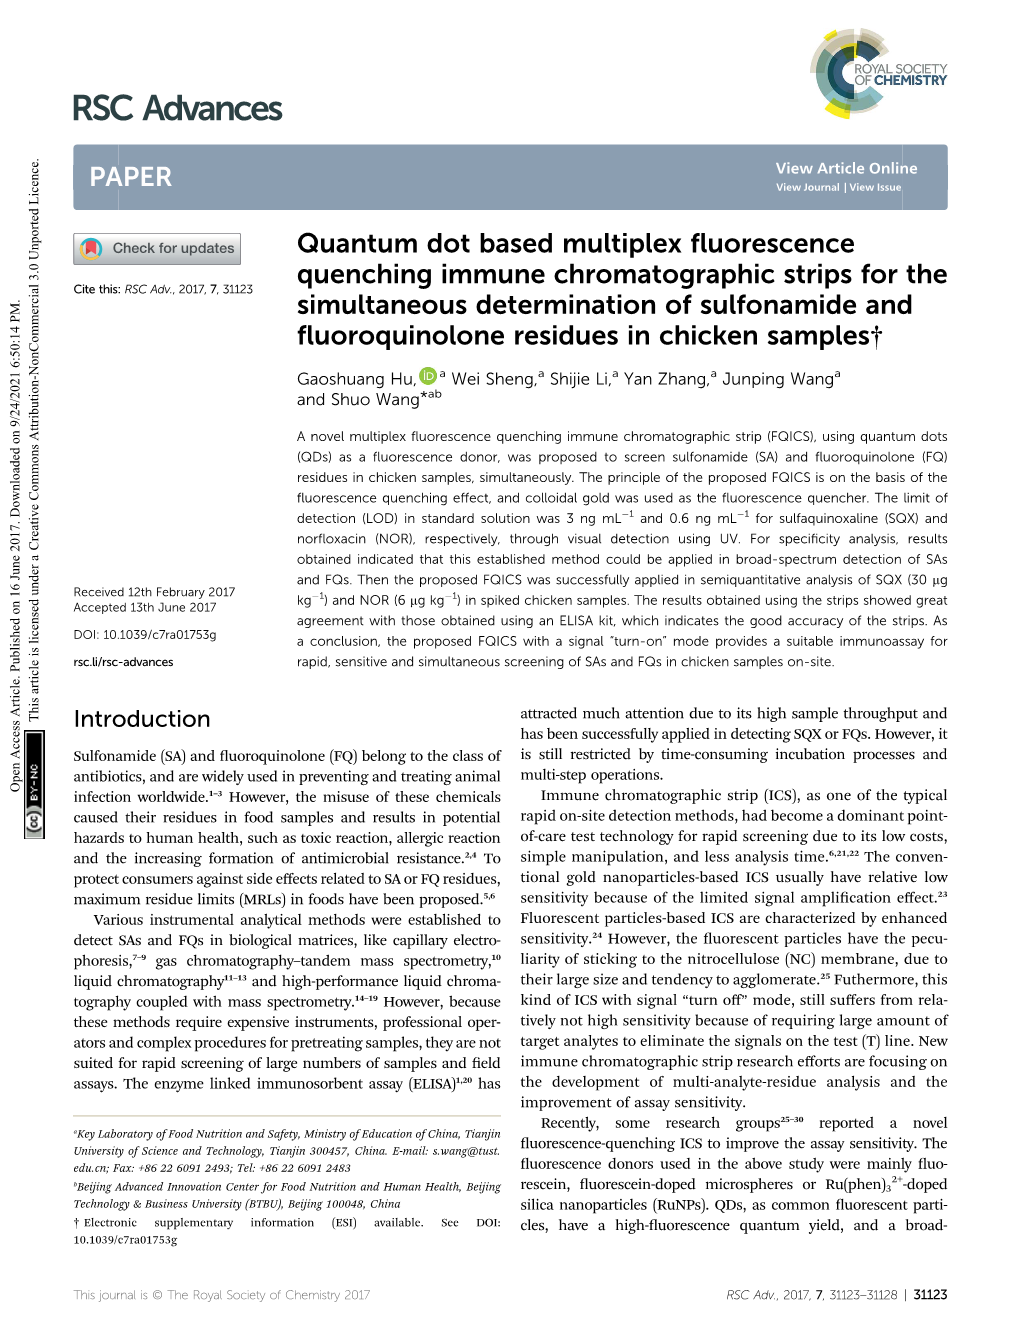 Quantum Dot Based Multiplex Fluorescence Quenching Immune